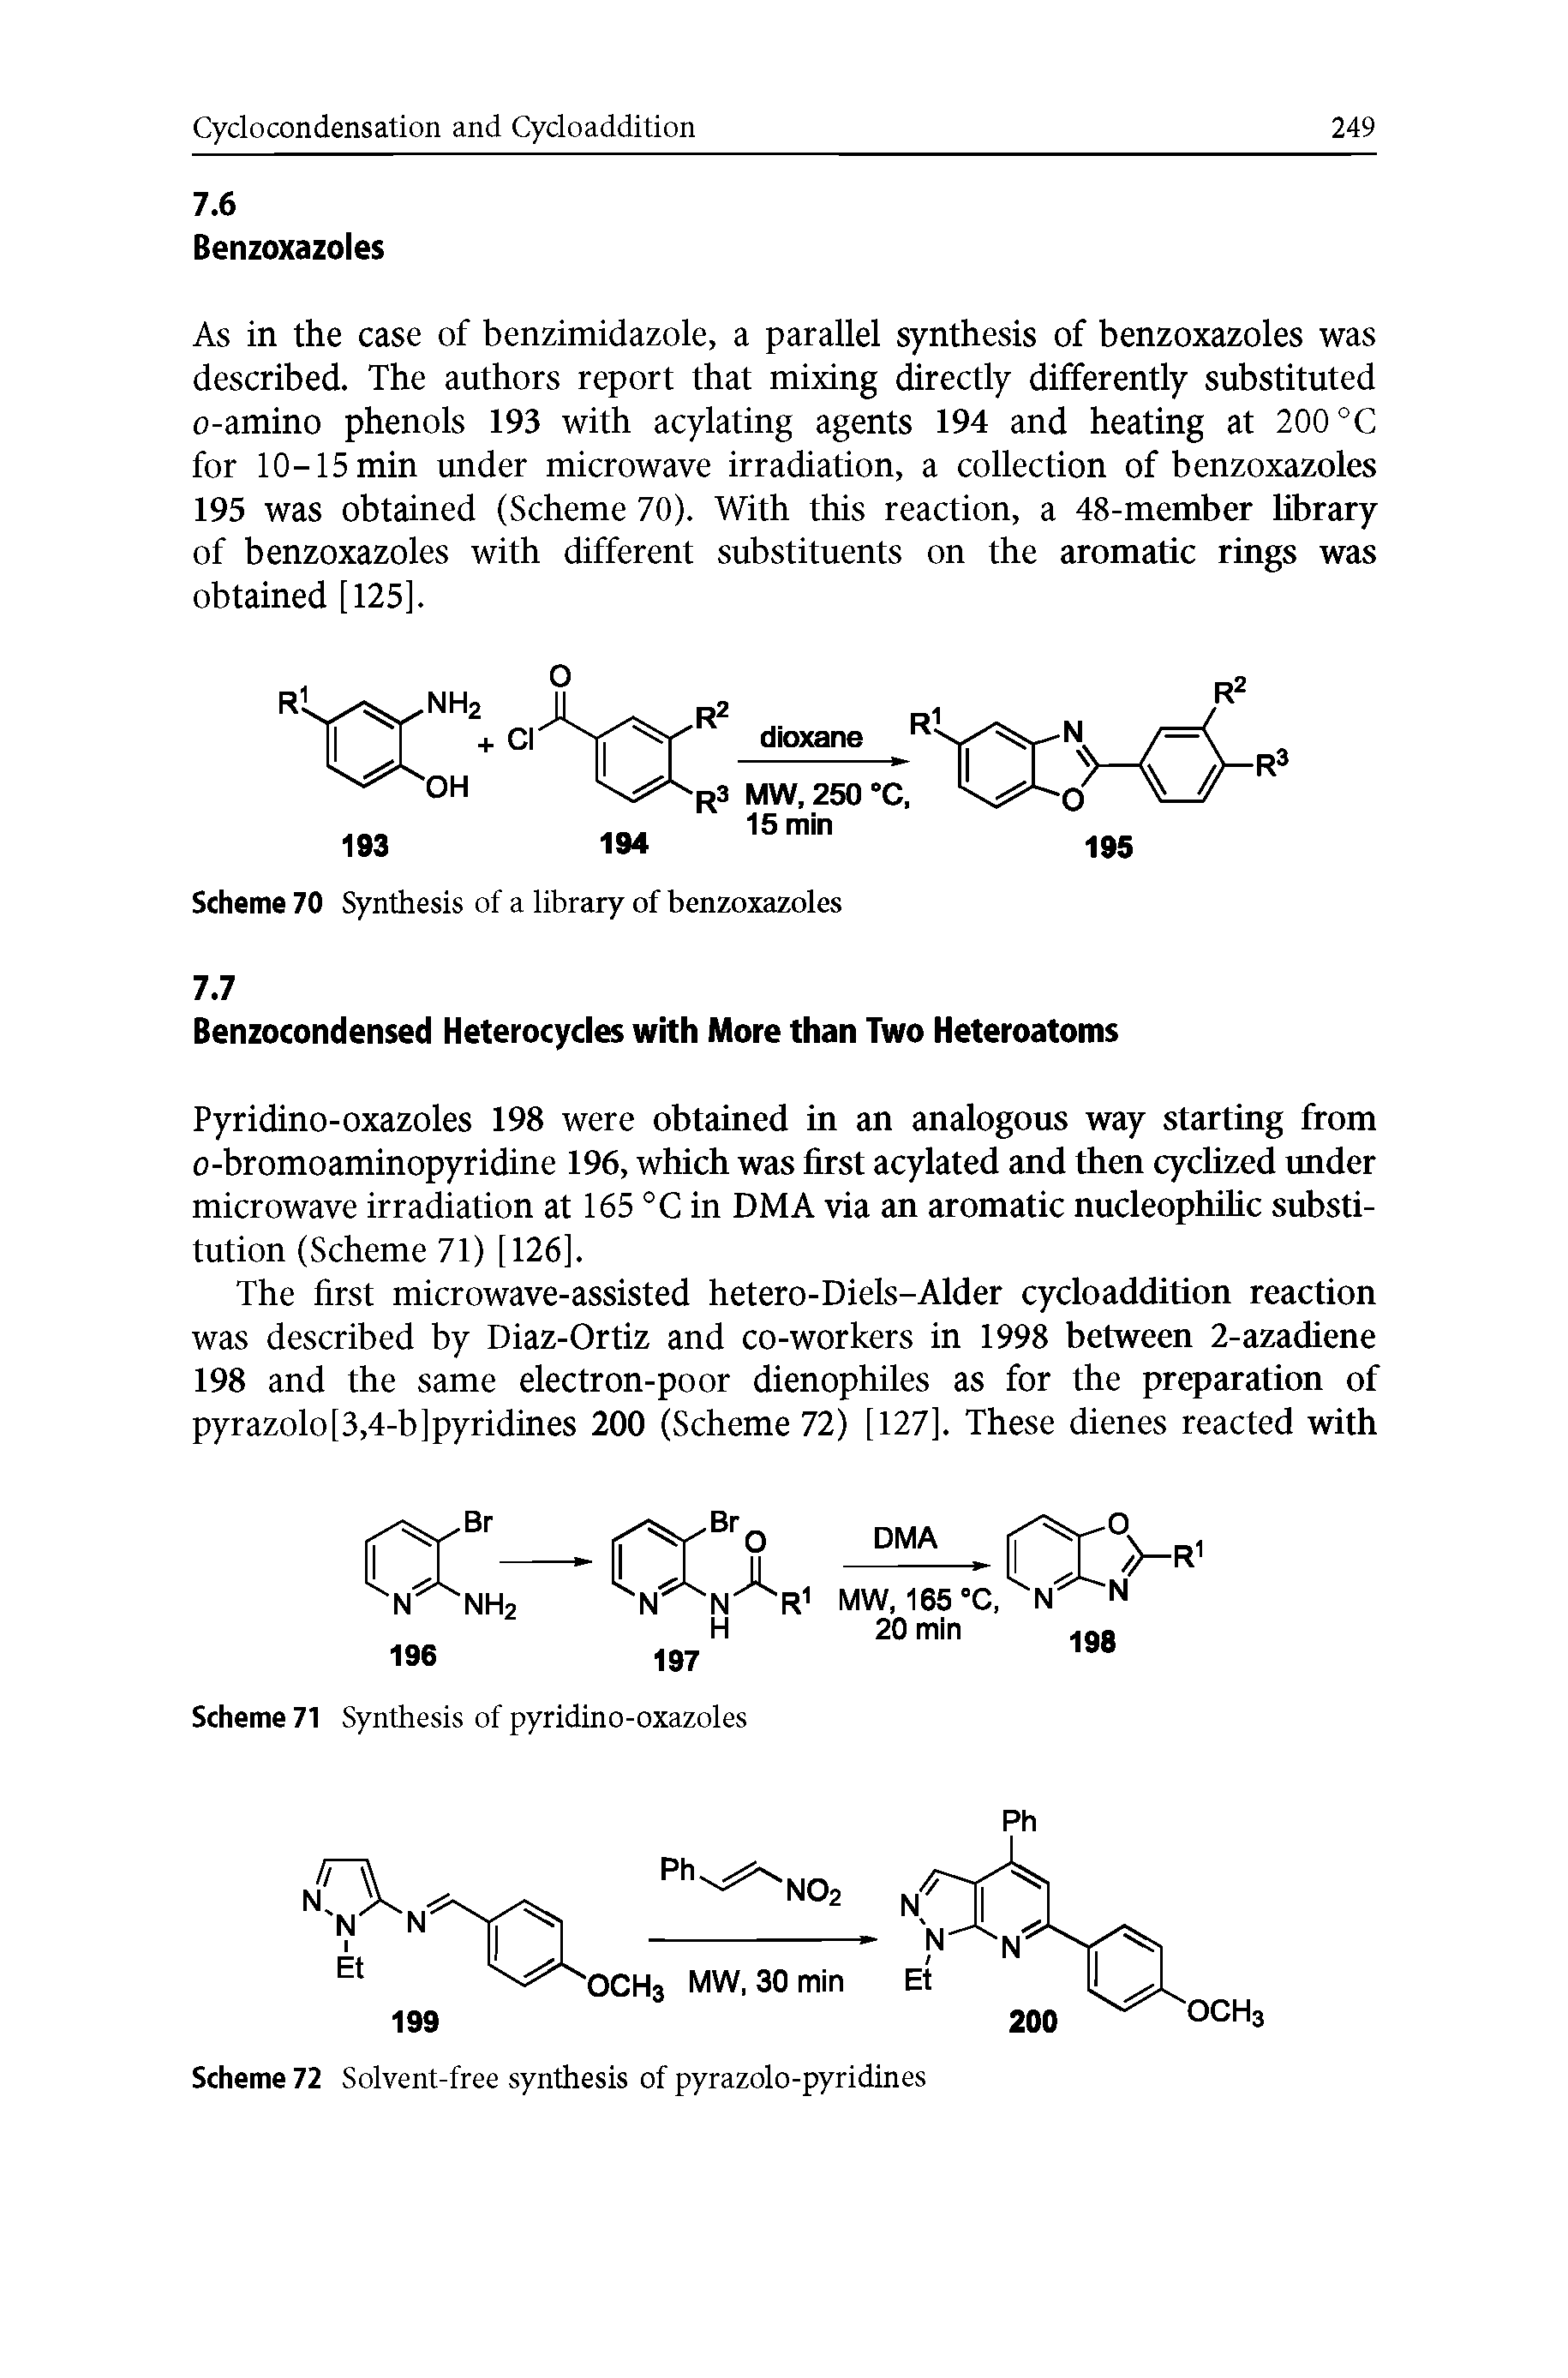 Scheme 72 Solvent-free synthesis of pyrazolo-pyridines...